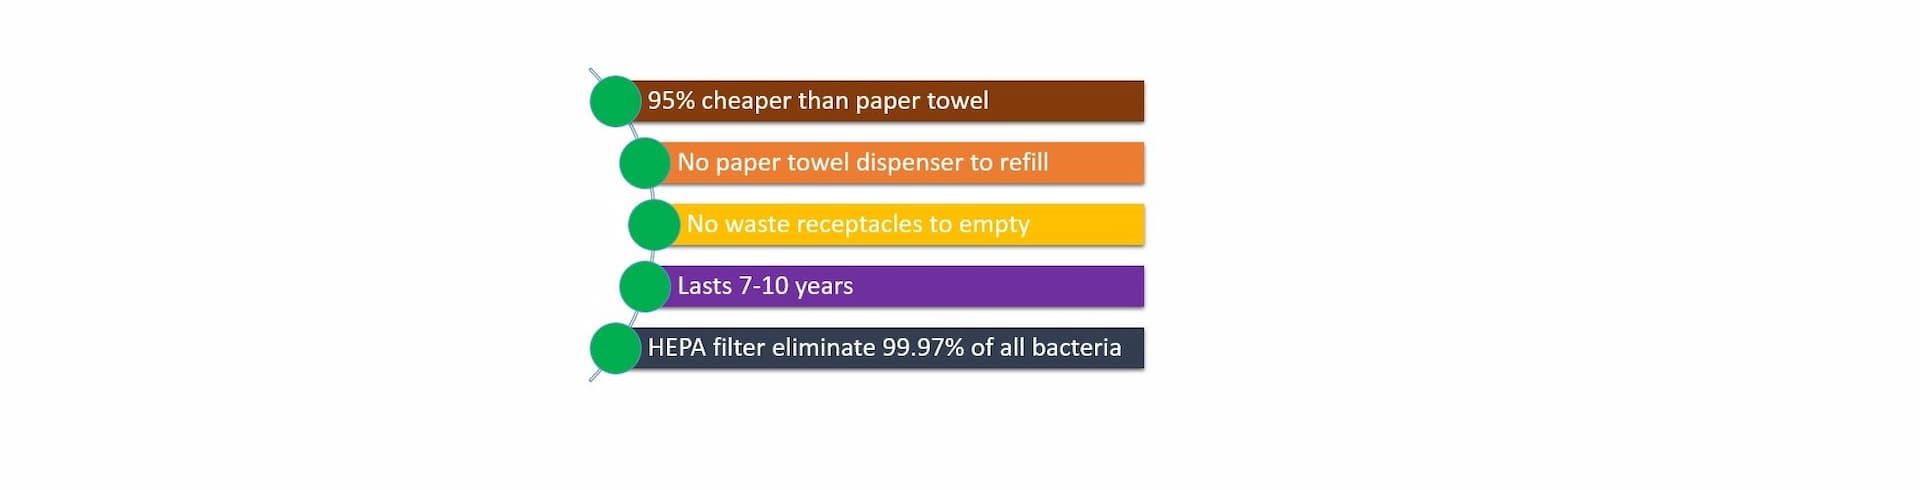 Hand Dryer Benefits